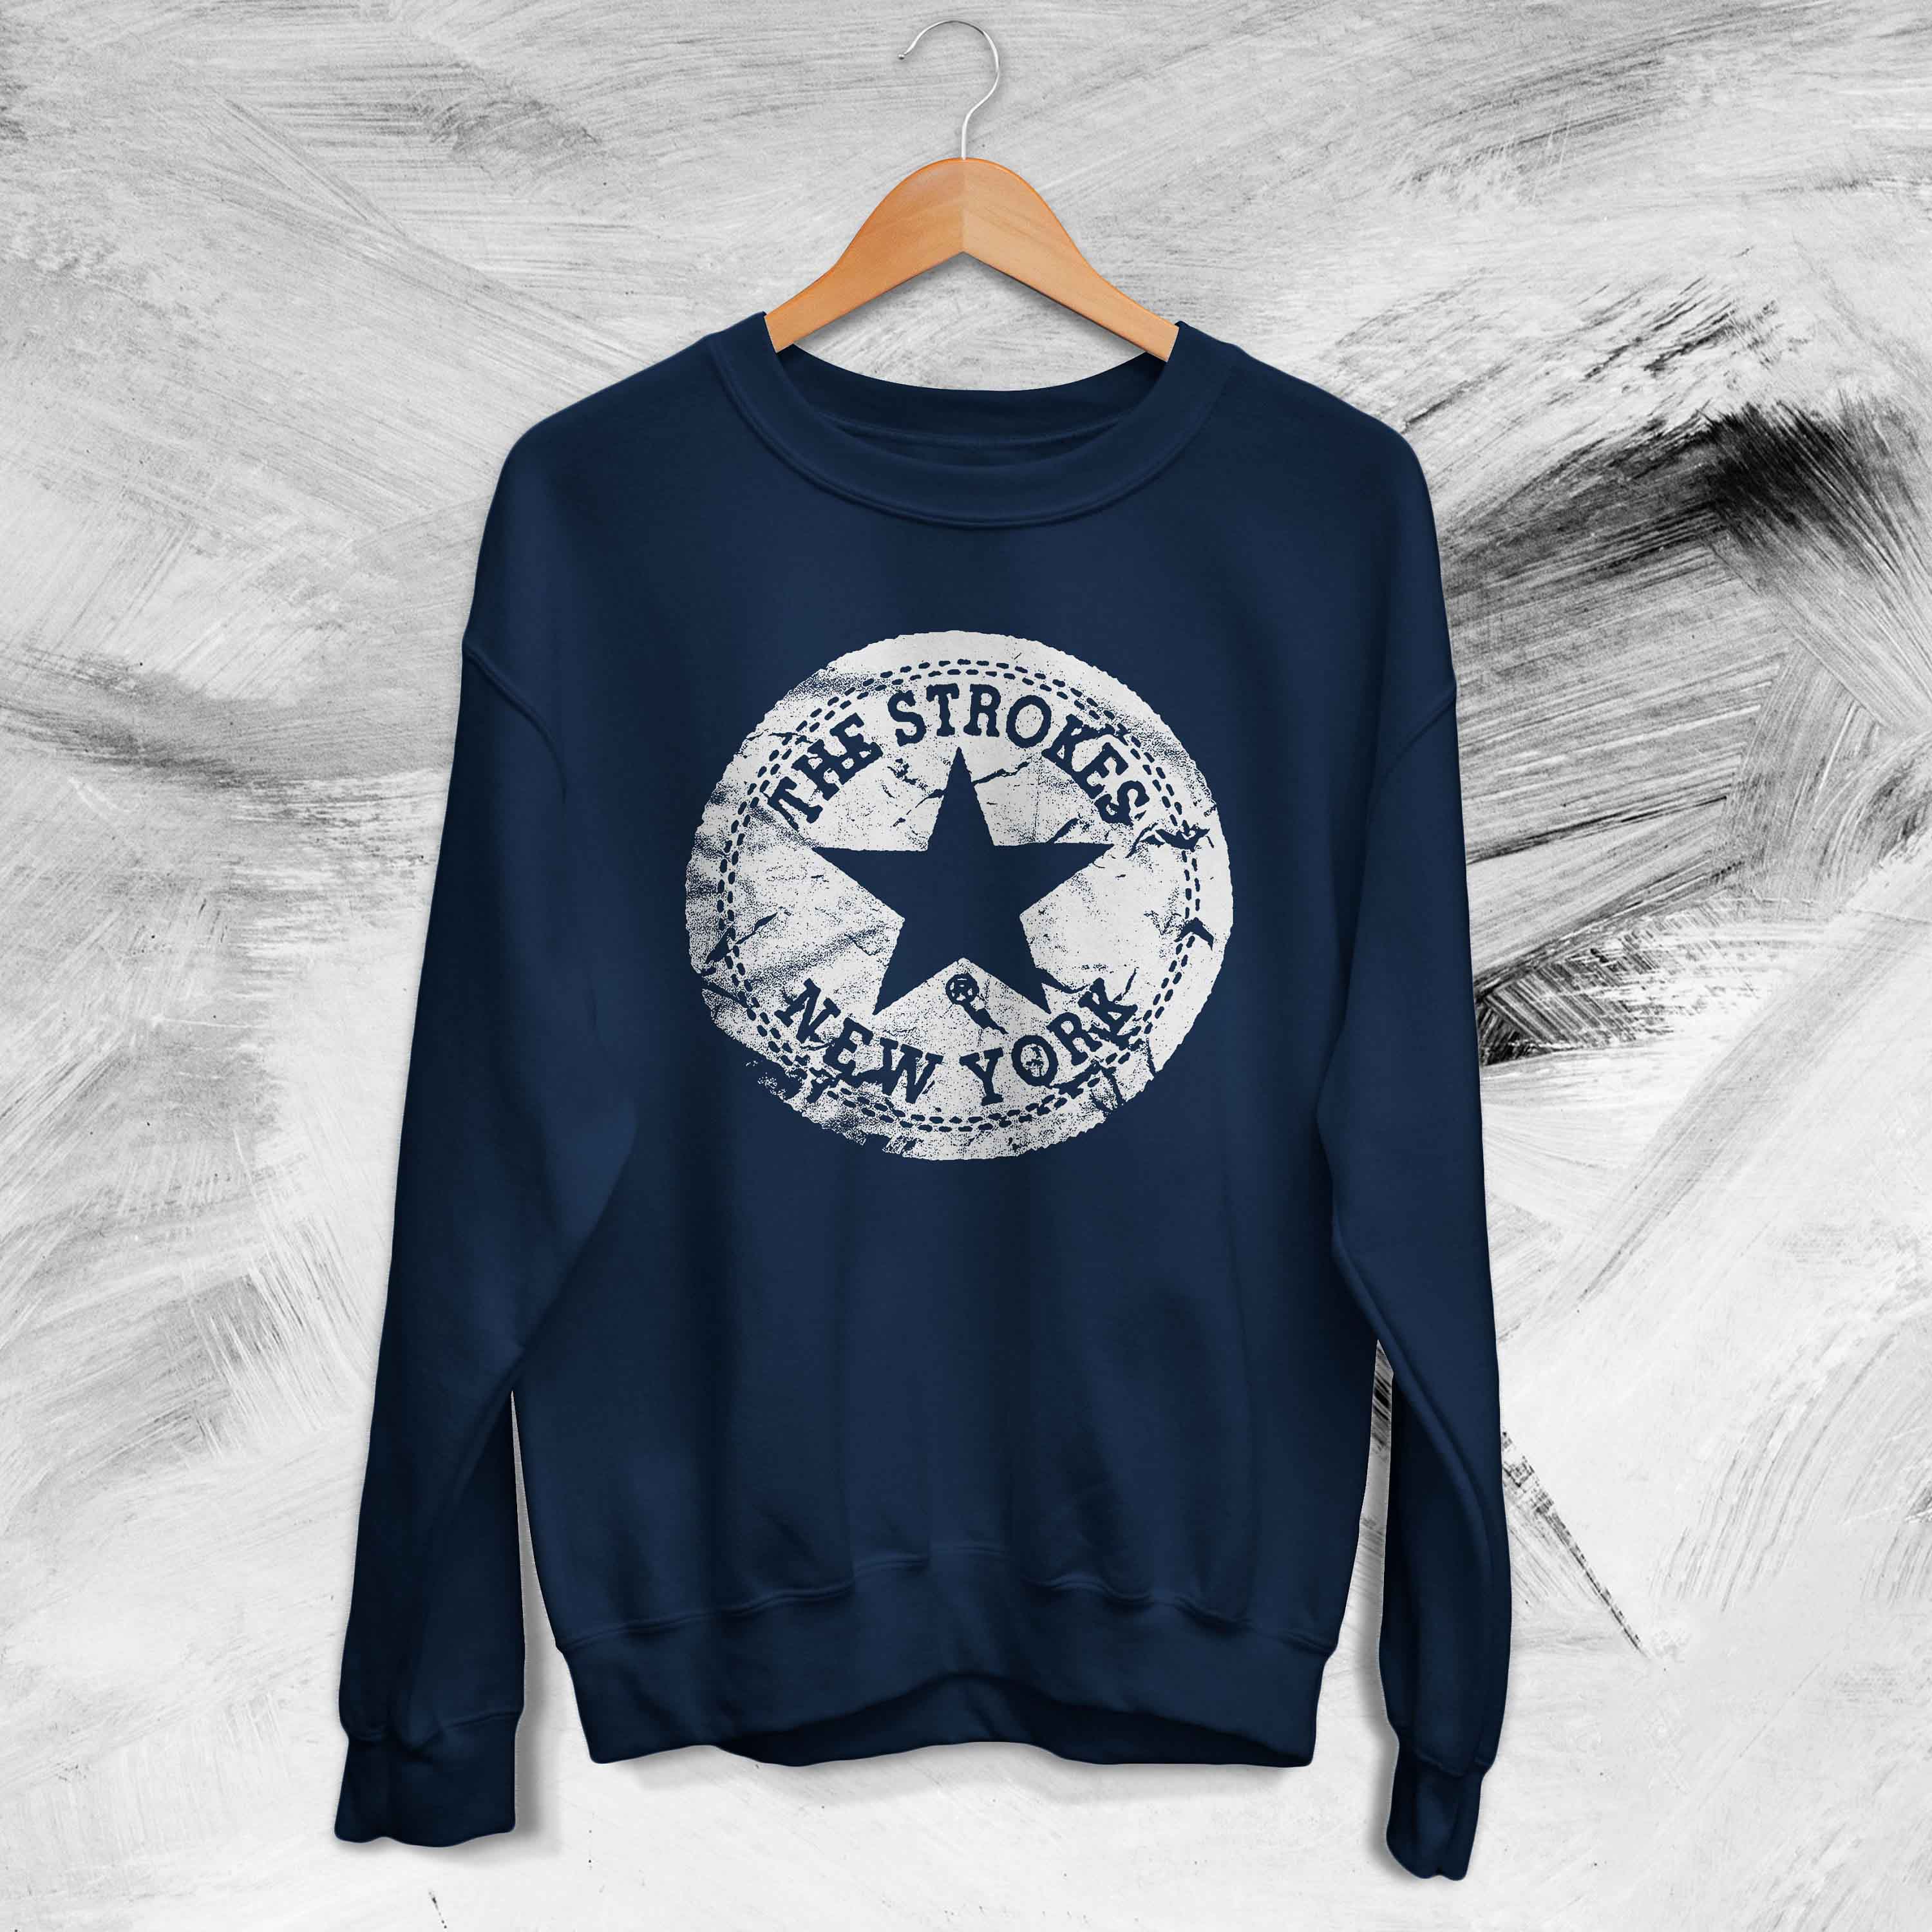 Vintage The Strokes Band New York Rock Music Graphic Unisex Sweatshirt